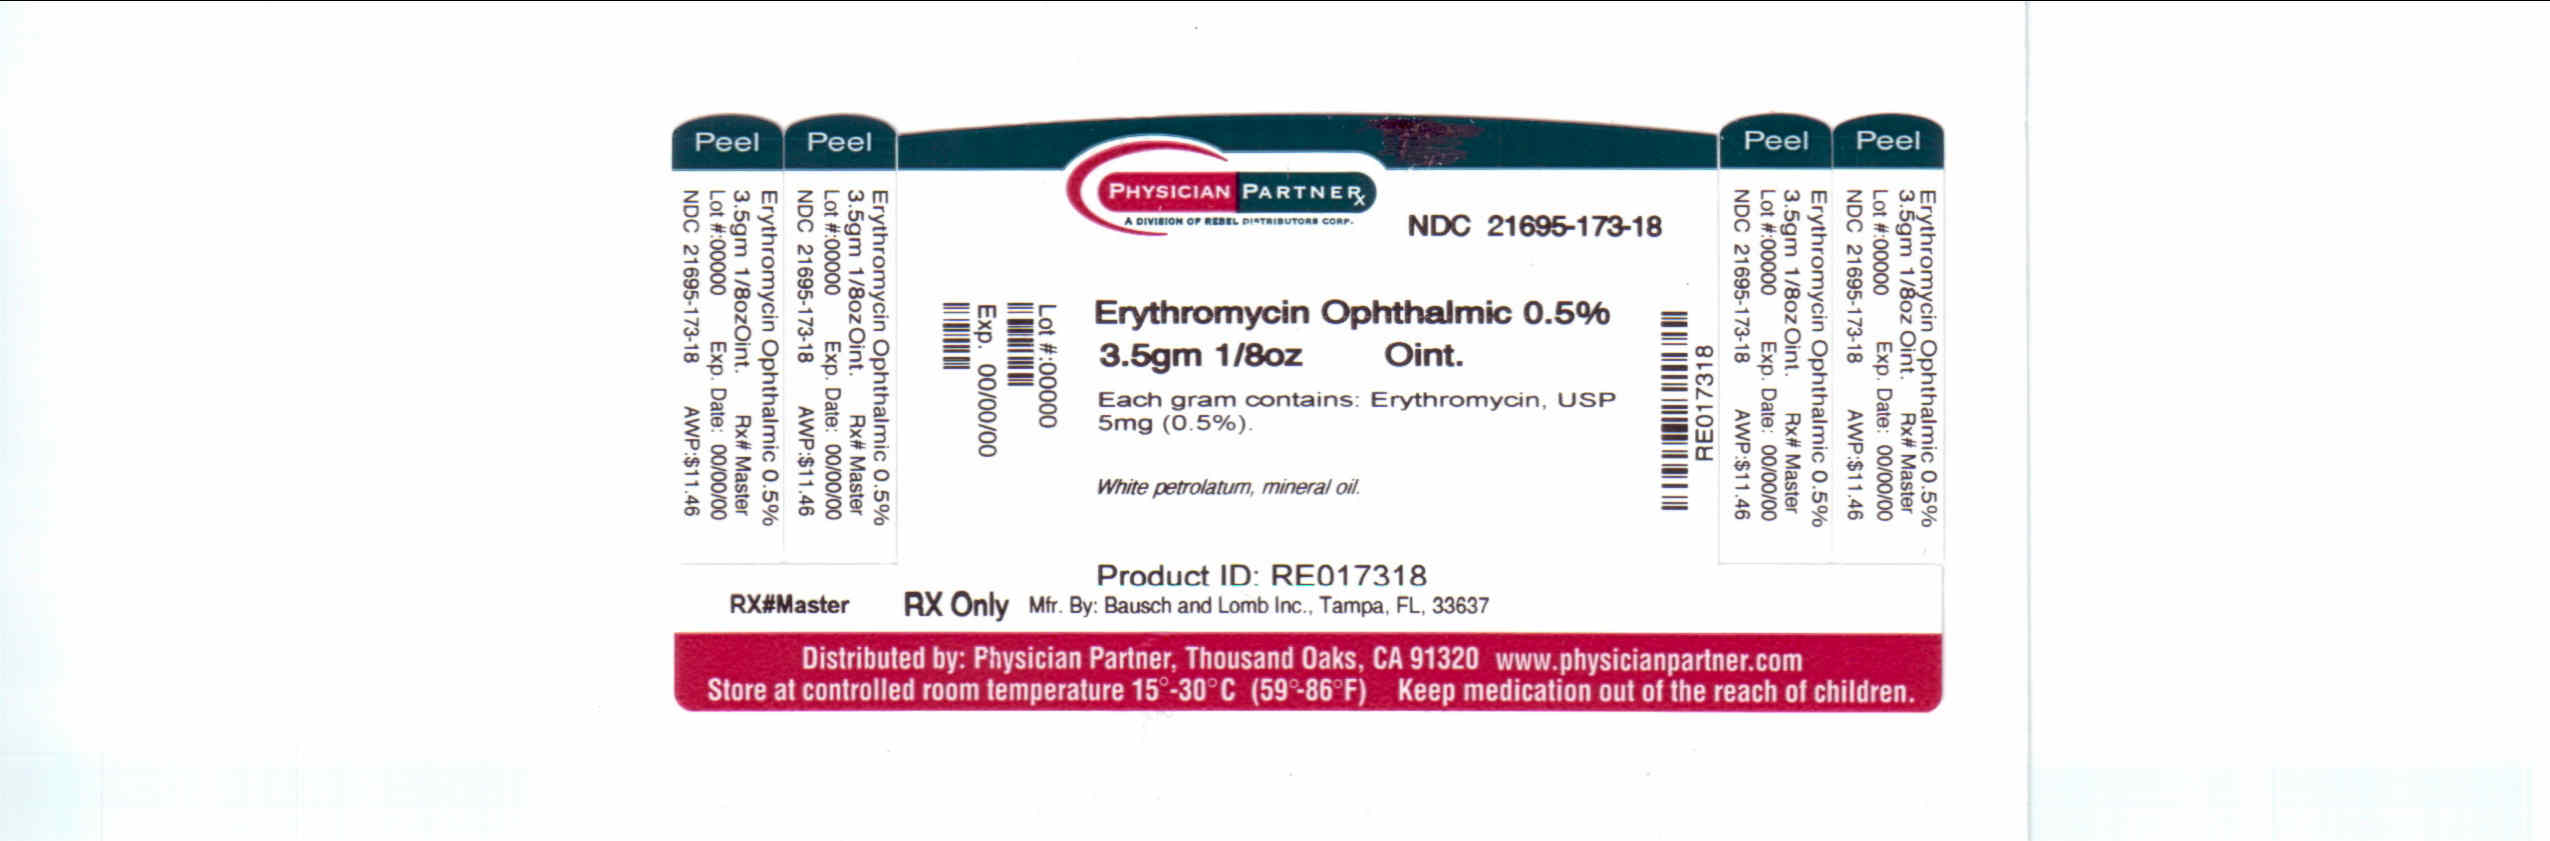 Erythromycin Ophthalmic